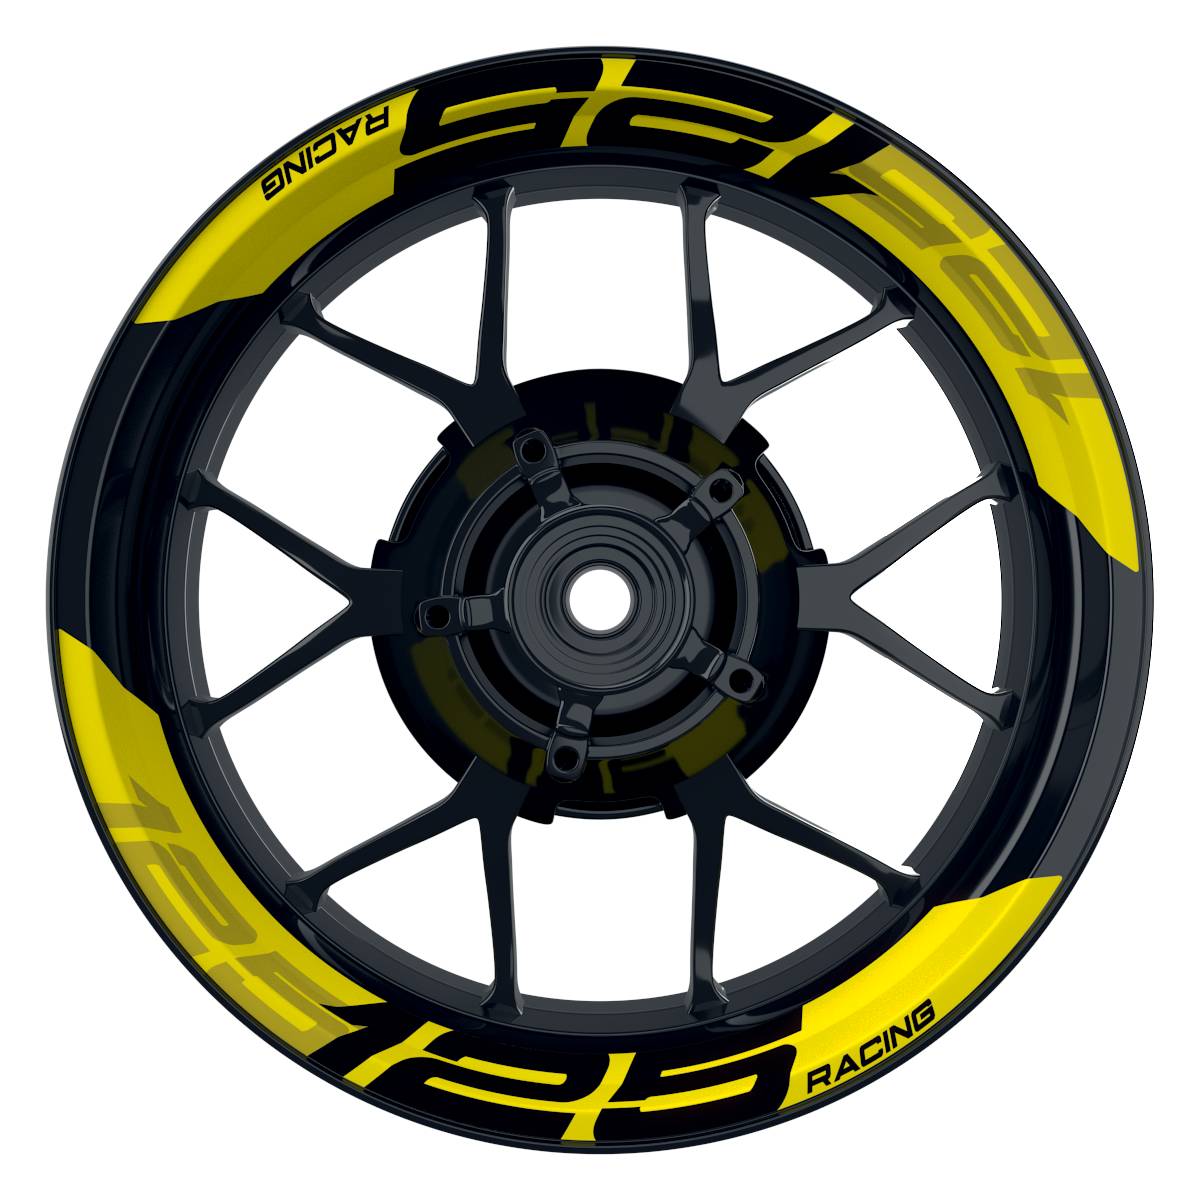 Wheelsticker Felgenaufkleber KTM Racing 125 einfarbig V2 gelb Frontansicht